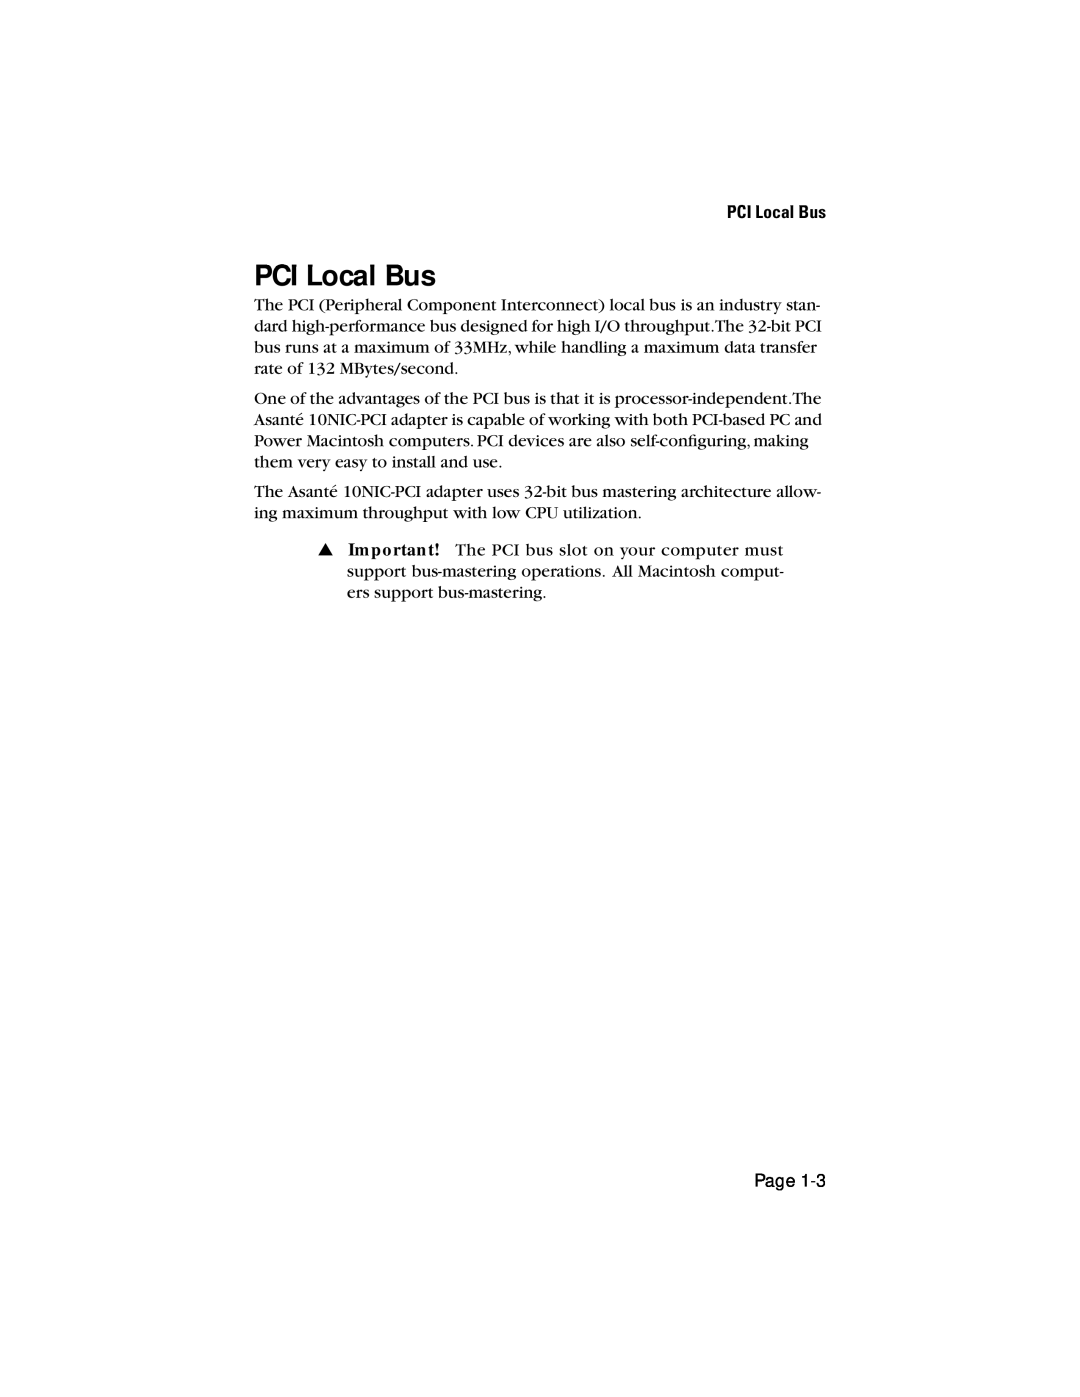 Asante Technologies 10NIC-PCITM manual PCI Local Bus 